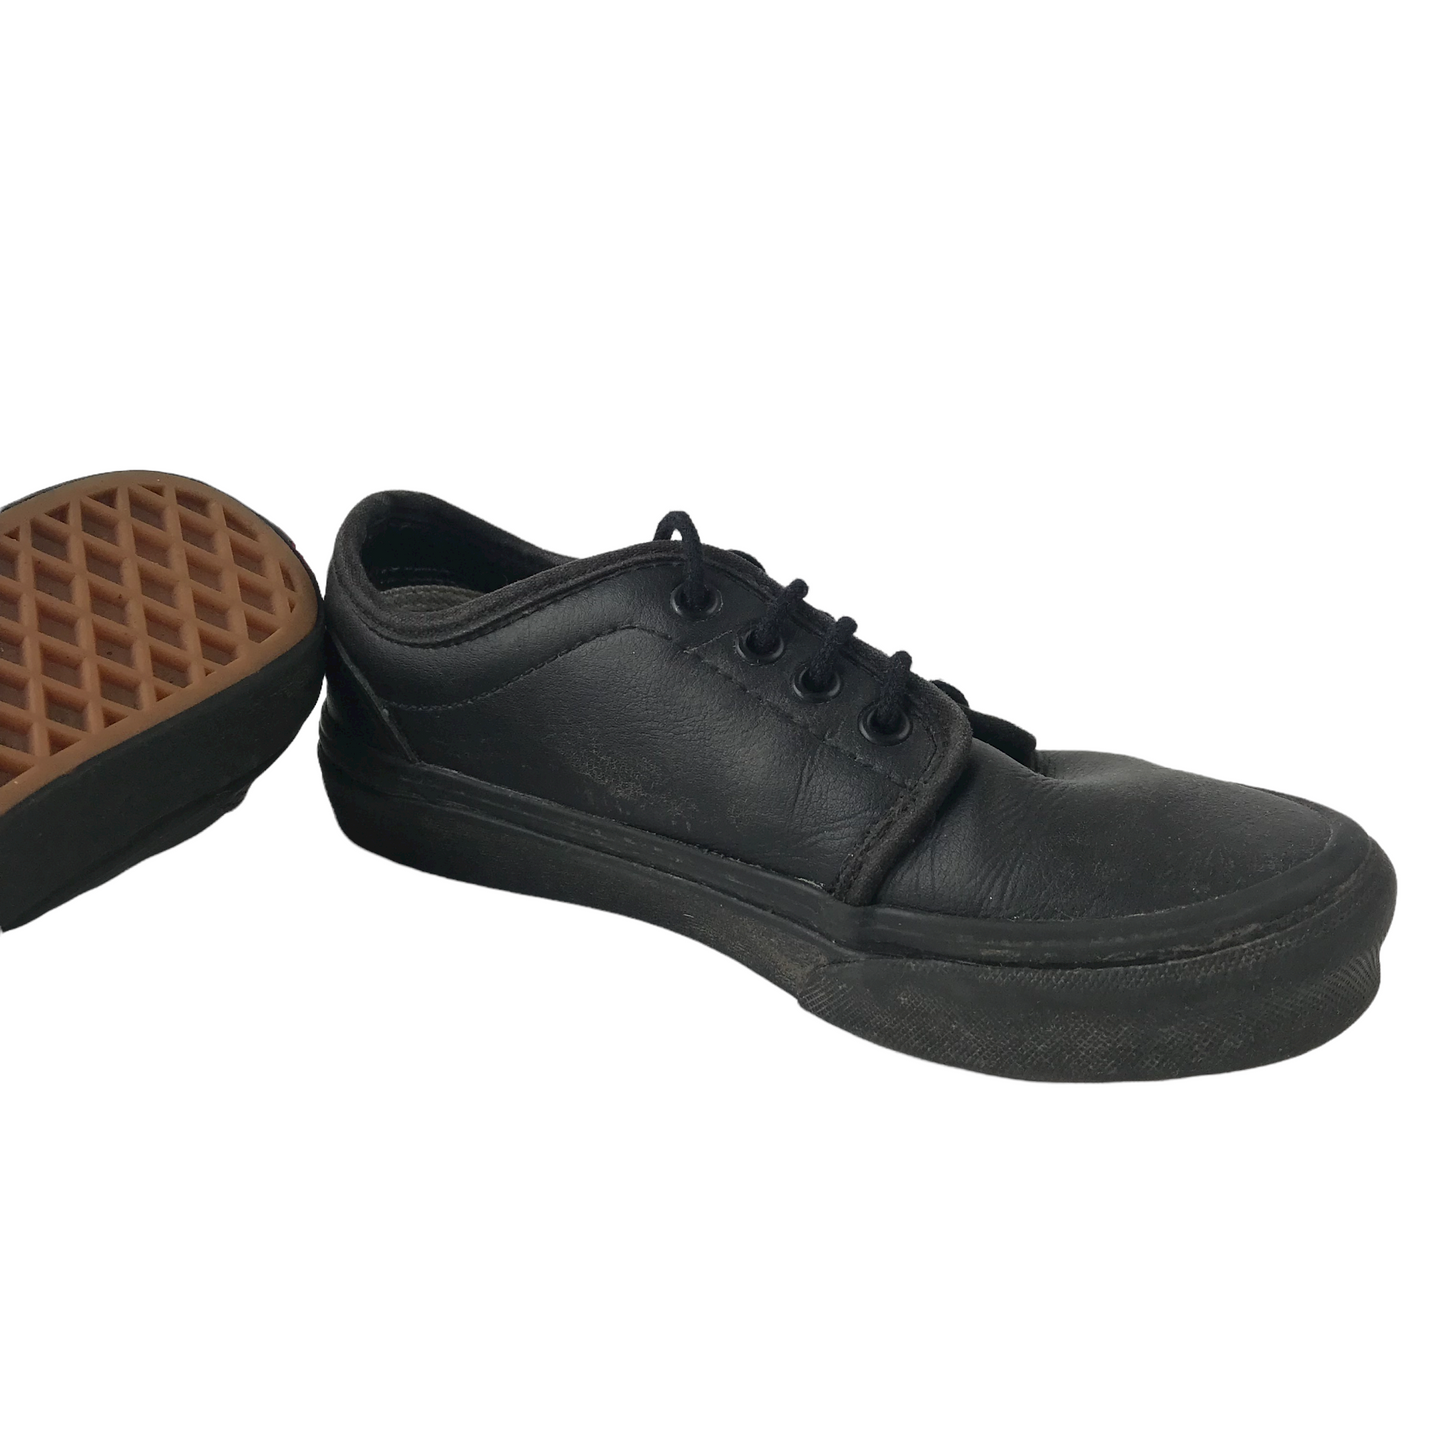 Vans Black Leather Trainers Shoe Size 1.5